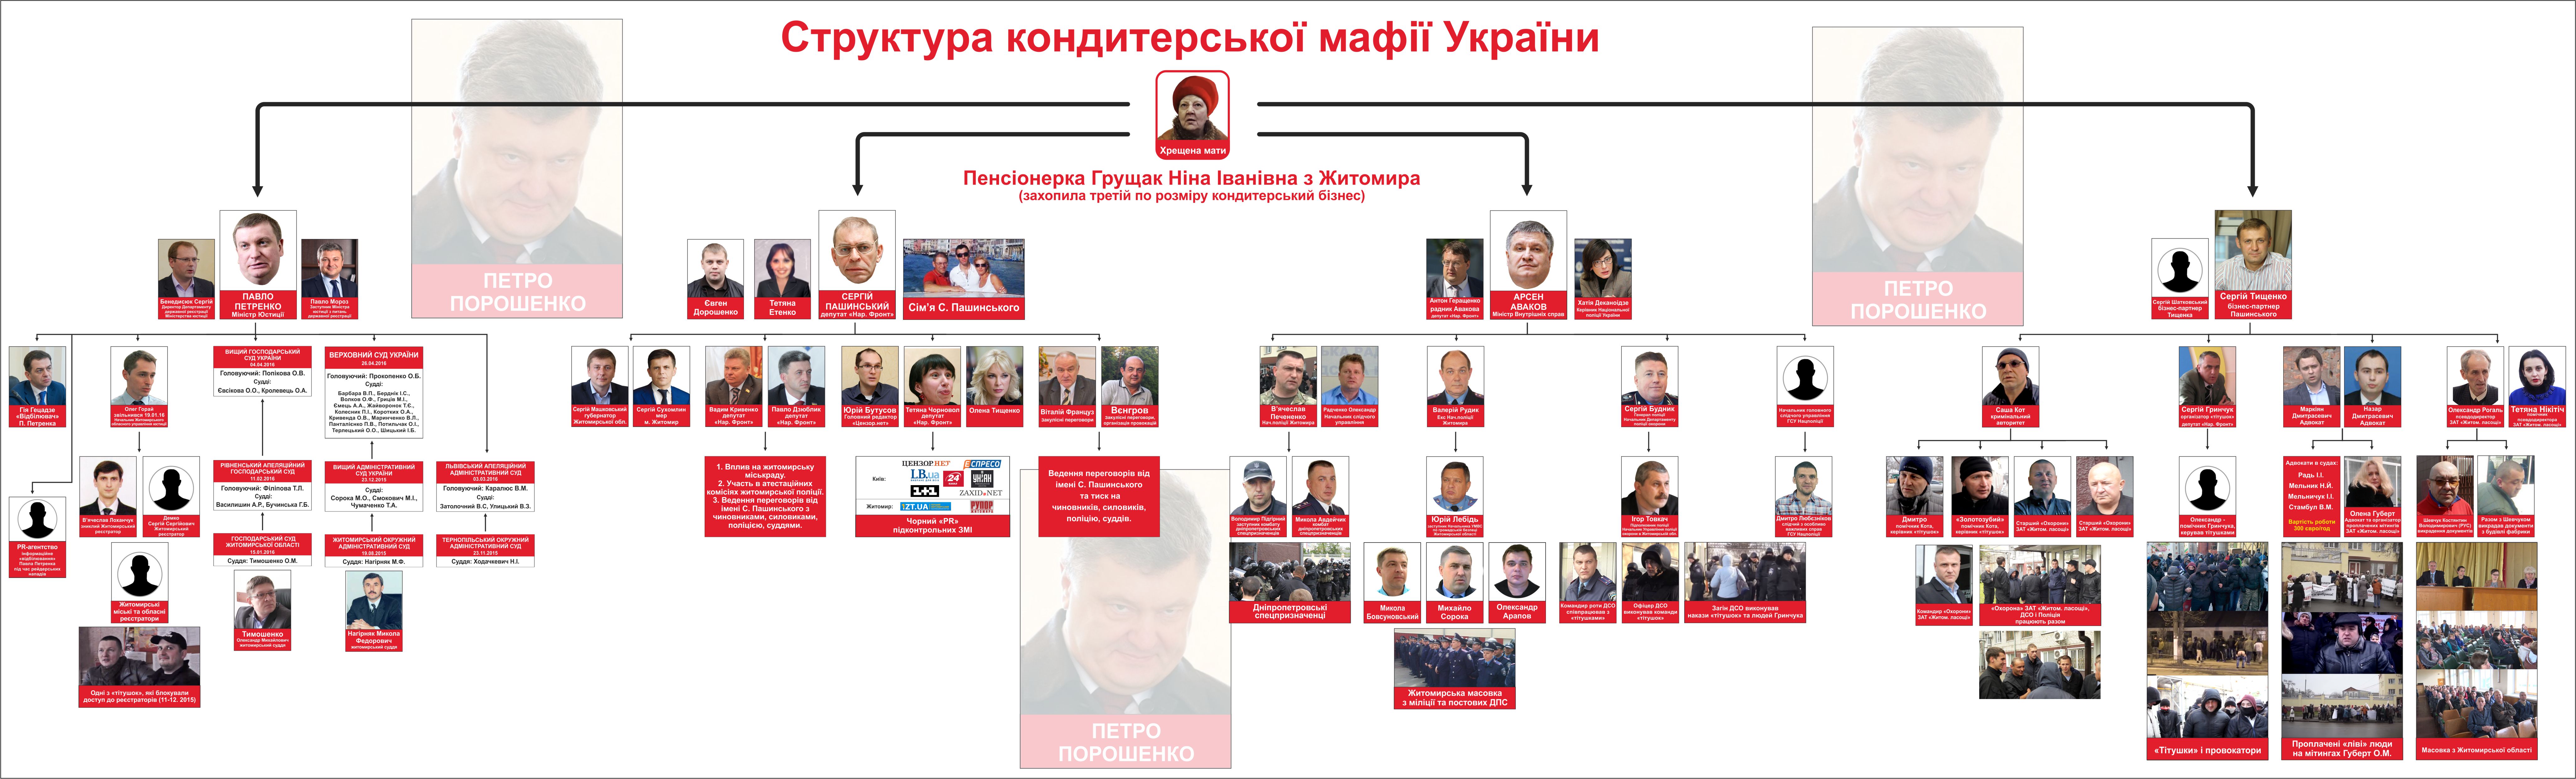 Структура кондитерської мафії в Україні